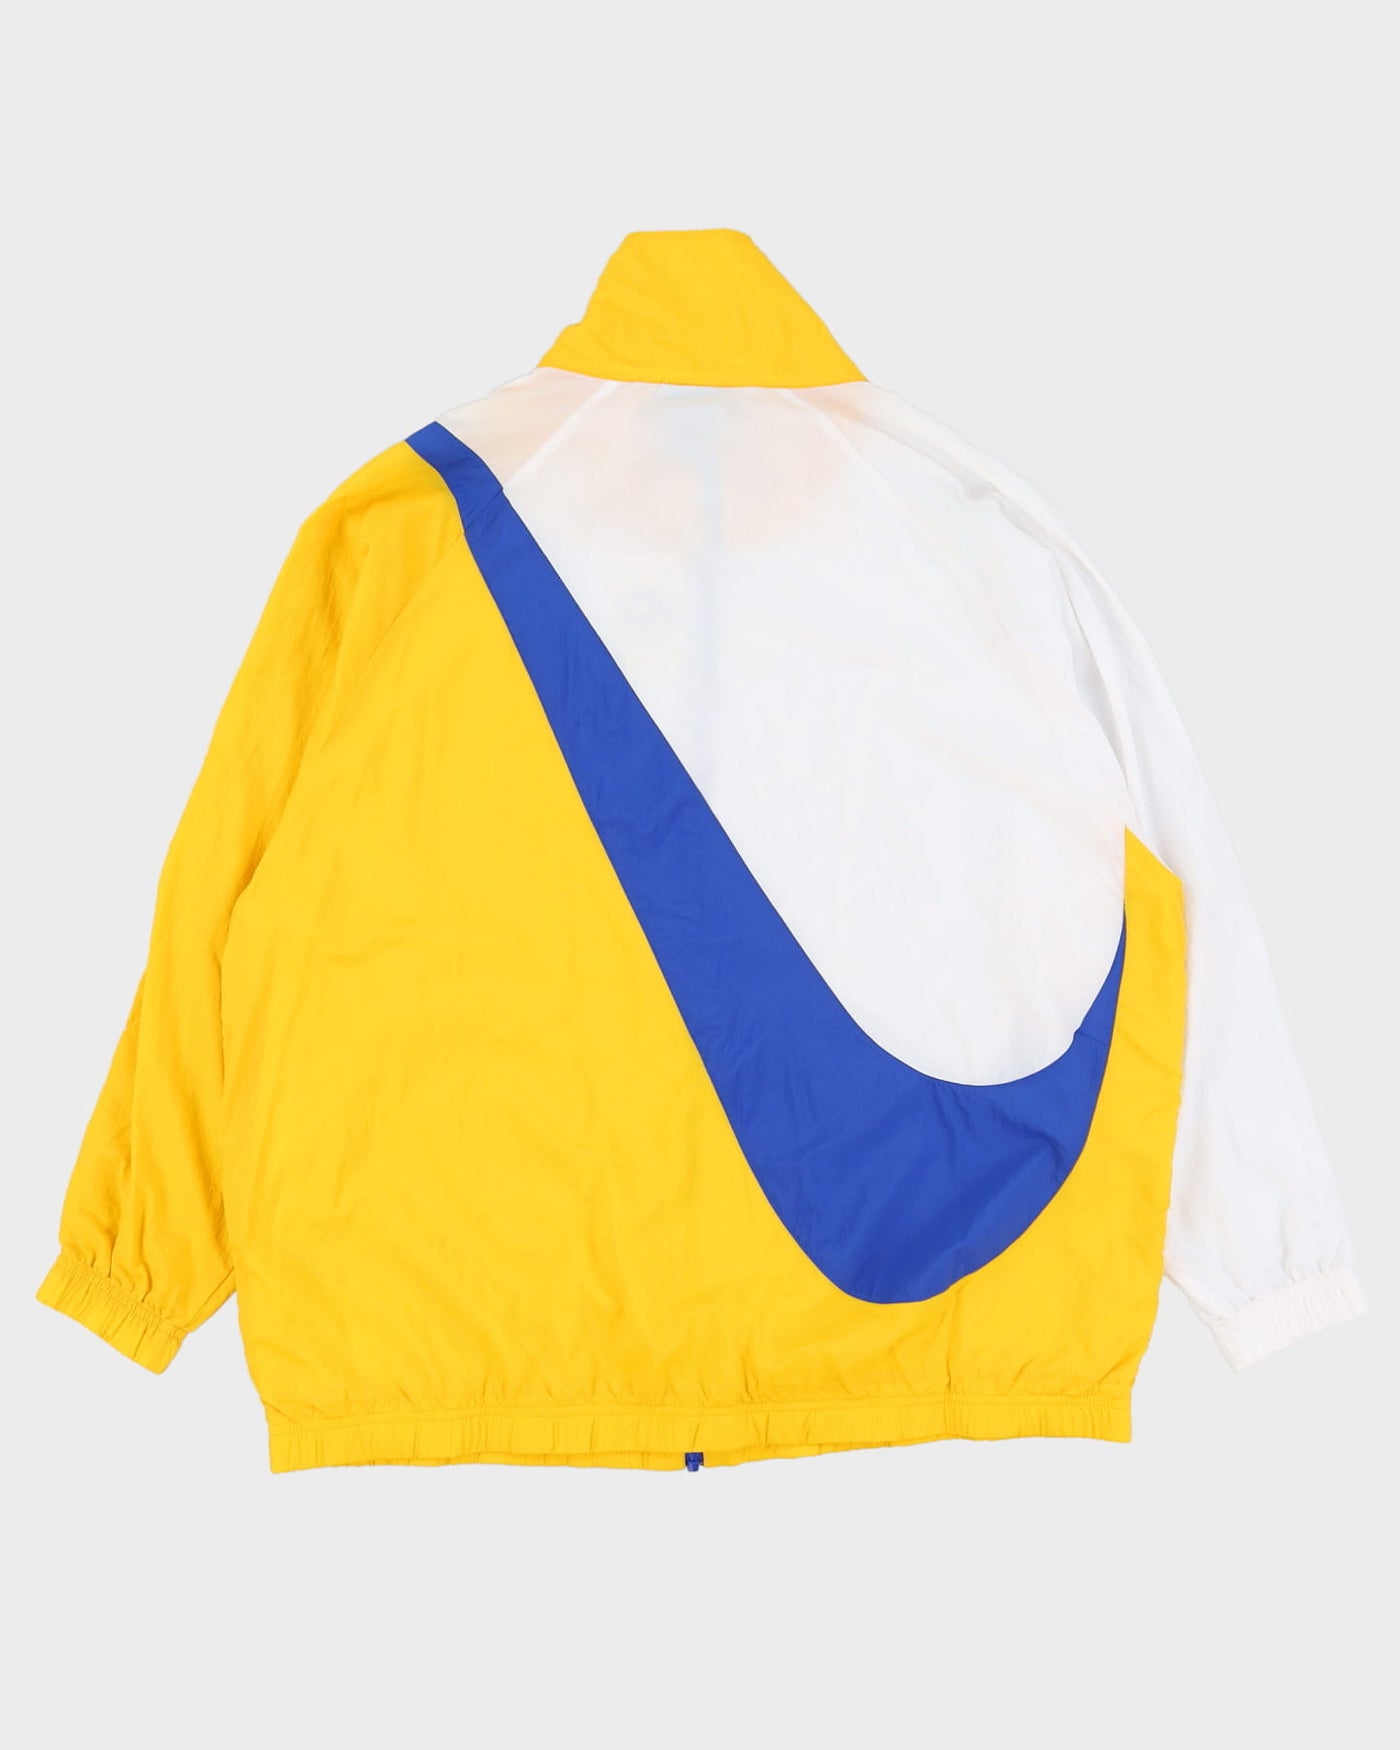 Nike Yellow / Blue / White Windbreaker Jacket - M